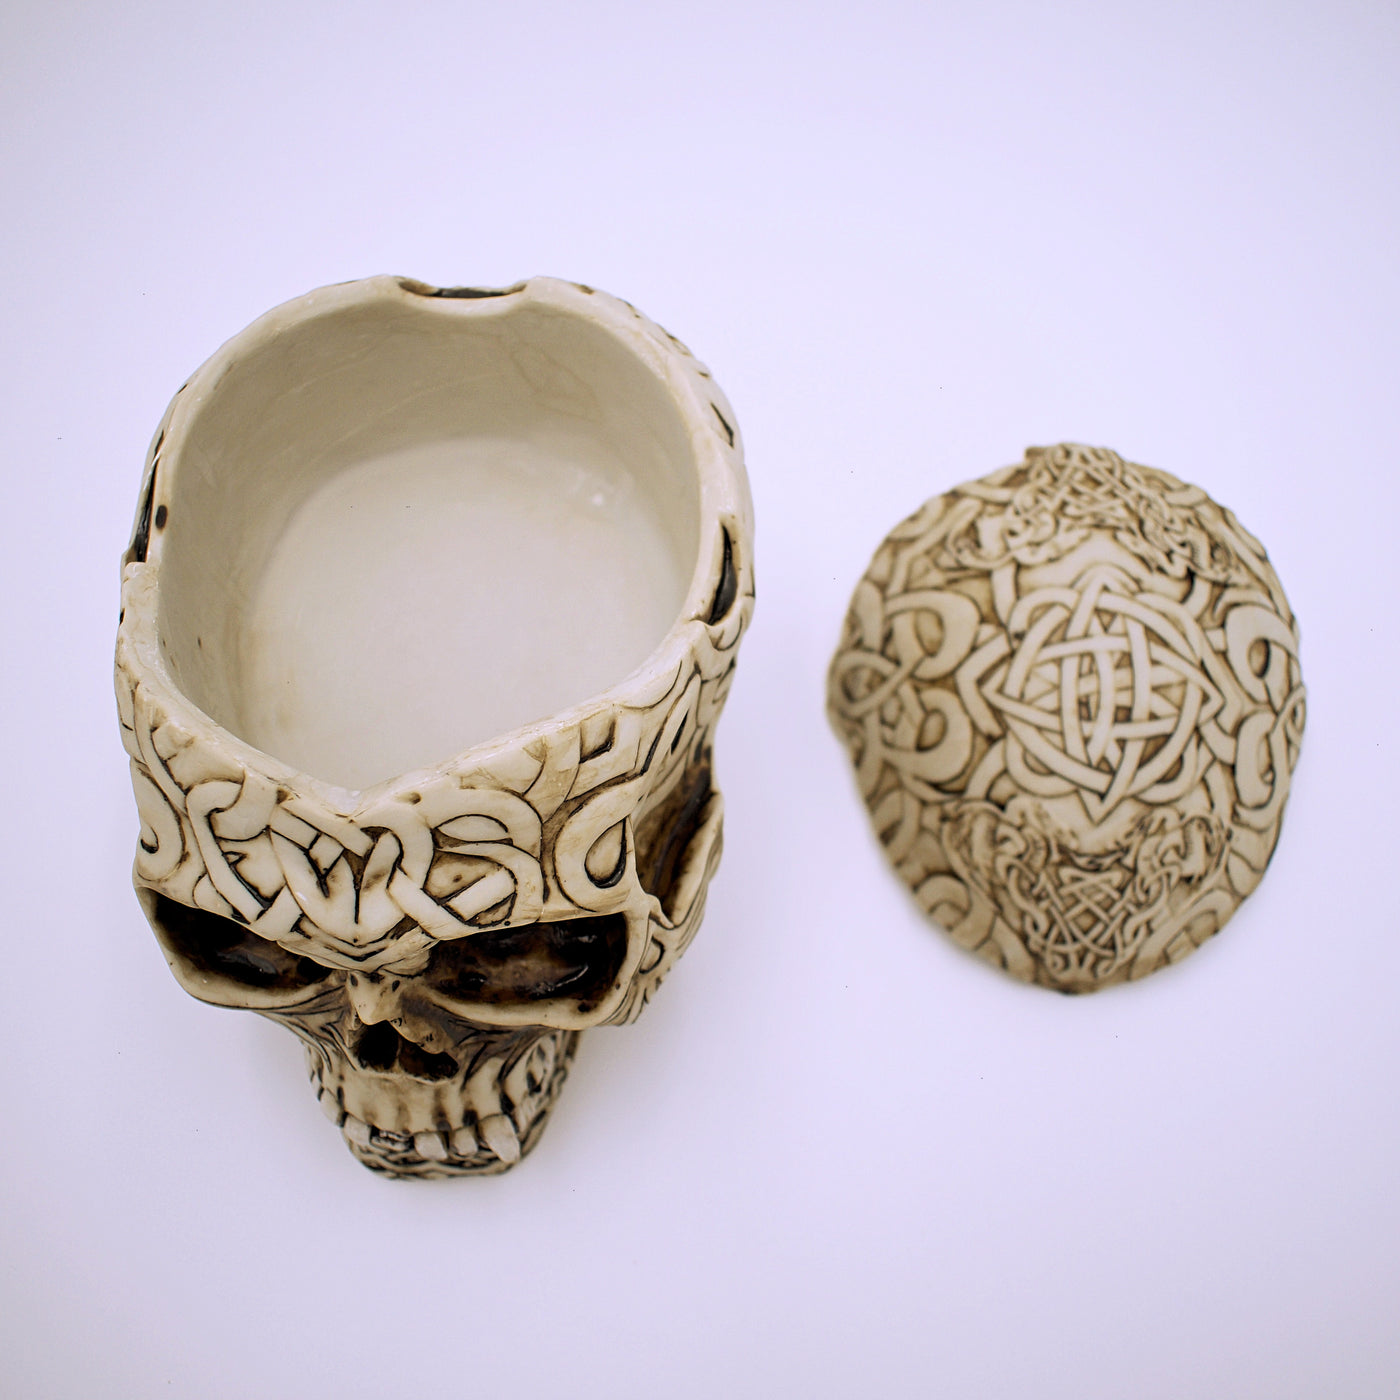 Celtic Skull Storage Box - The Cranio Collections